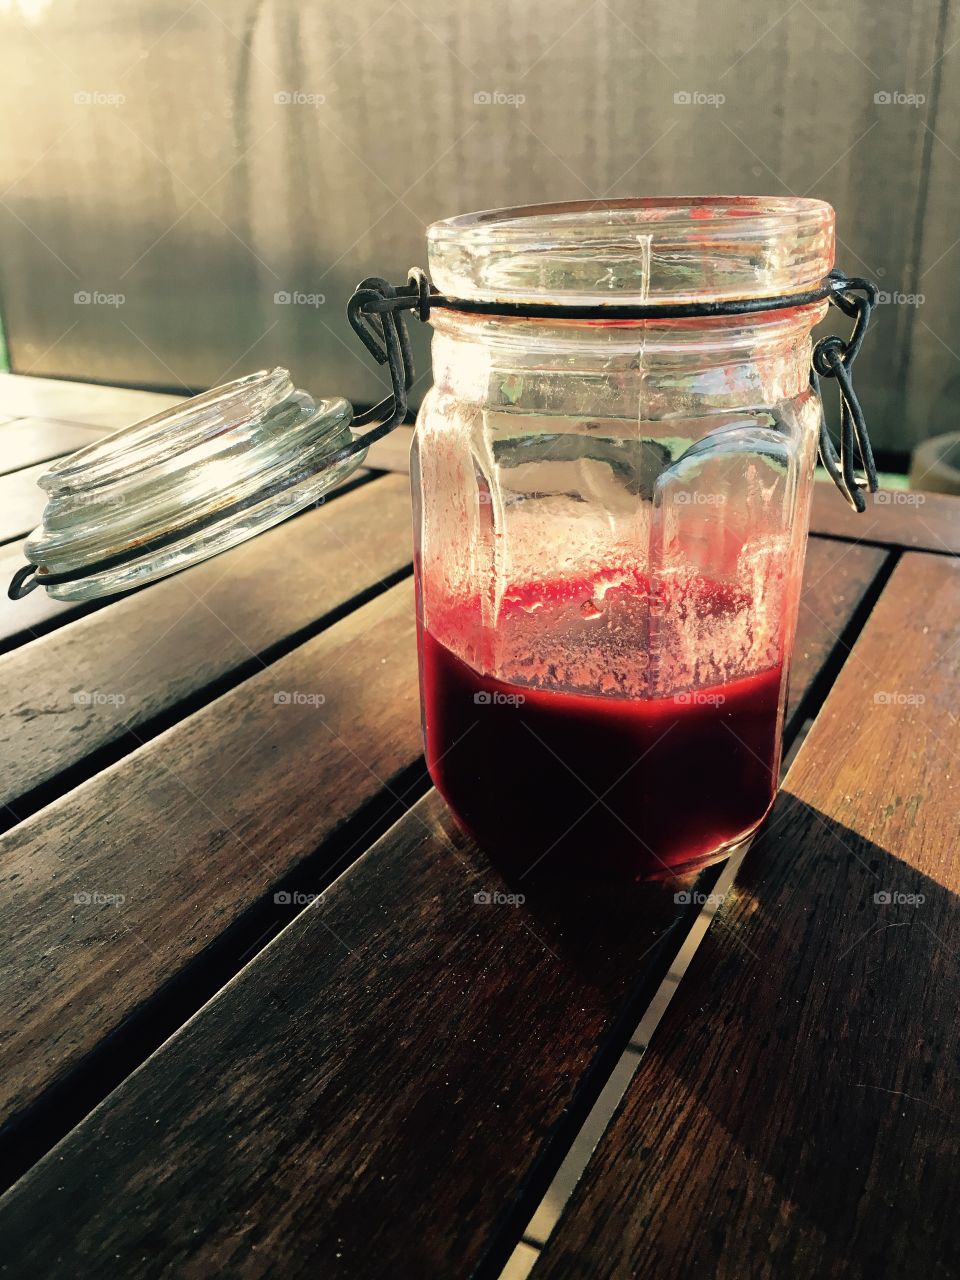  Berry juice in a jar